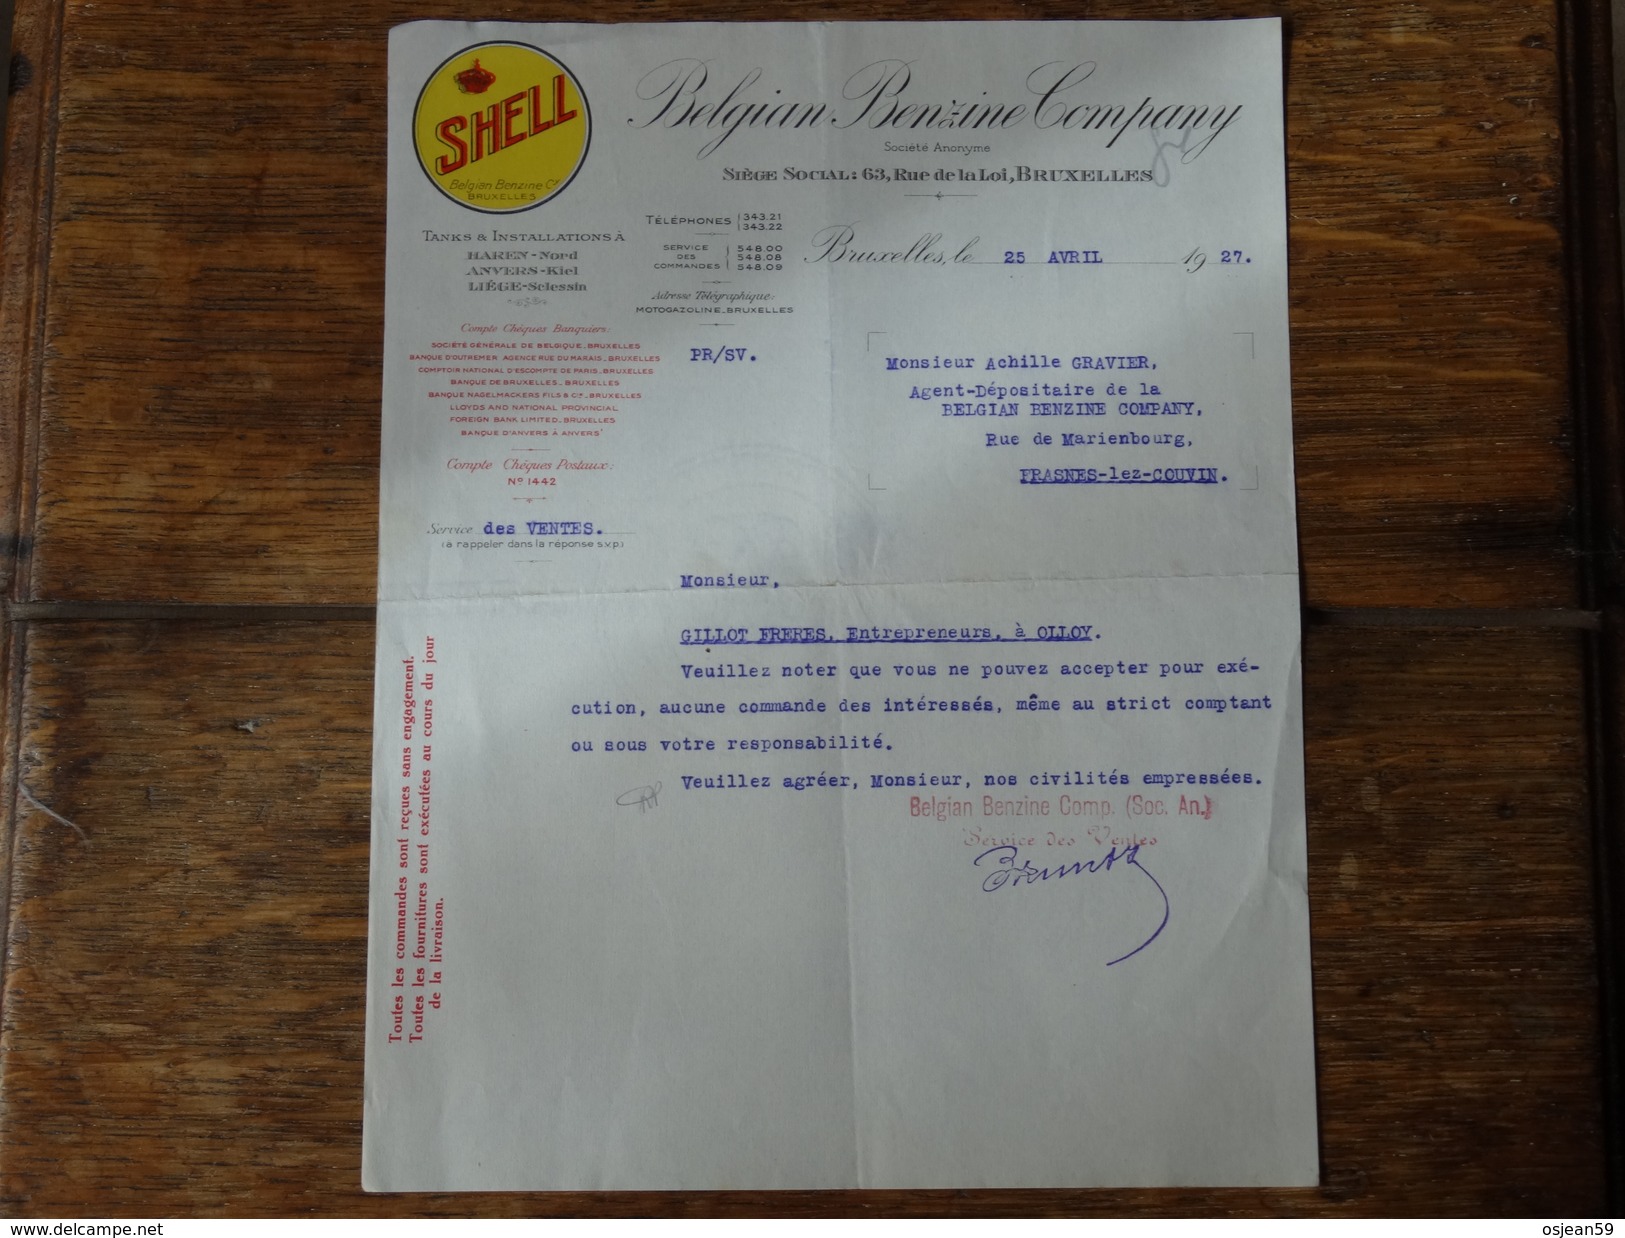 SHELL-Belgian Benzine Company - Courier Du 25 Avril 1927. - Automovilismo